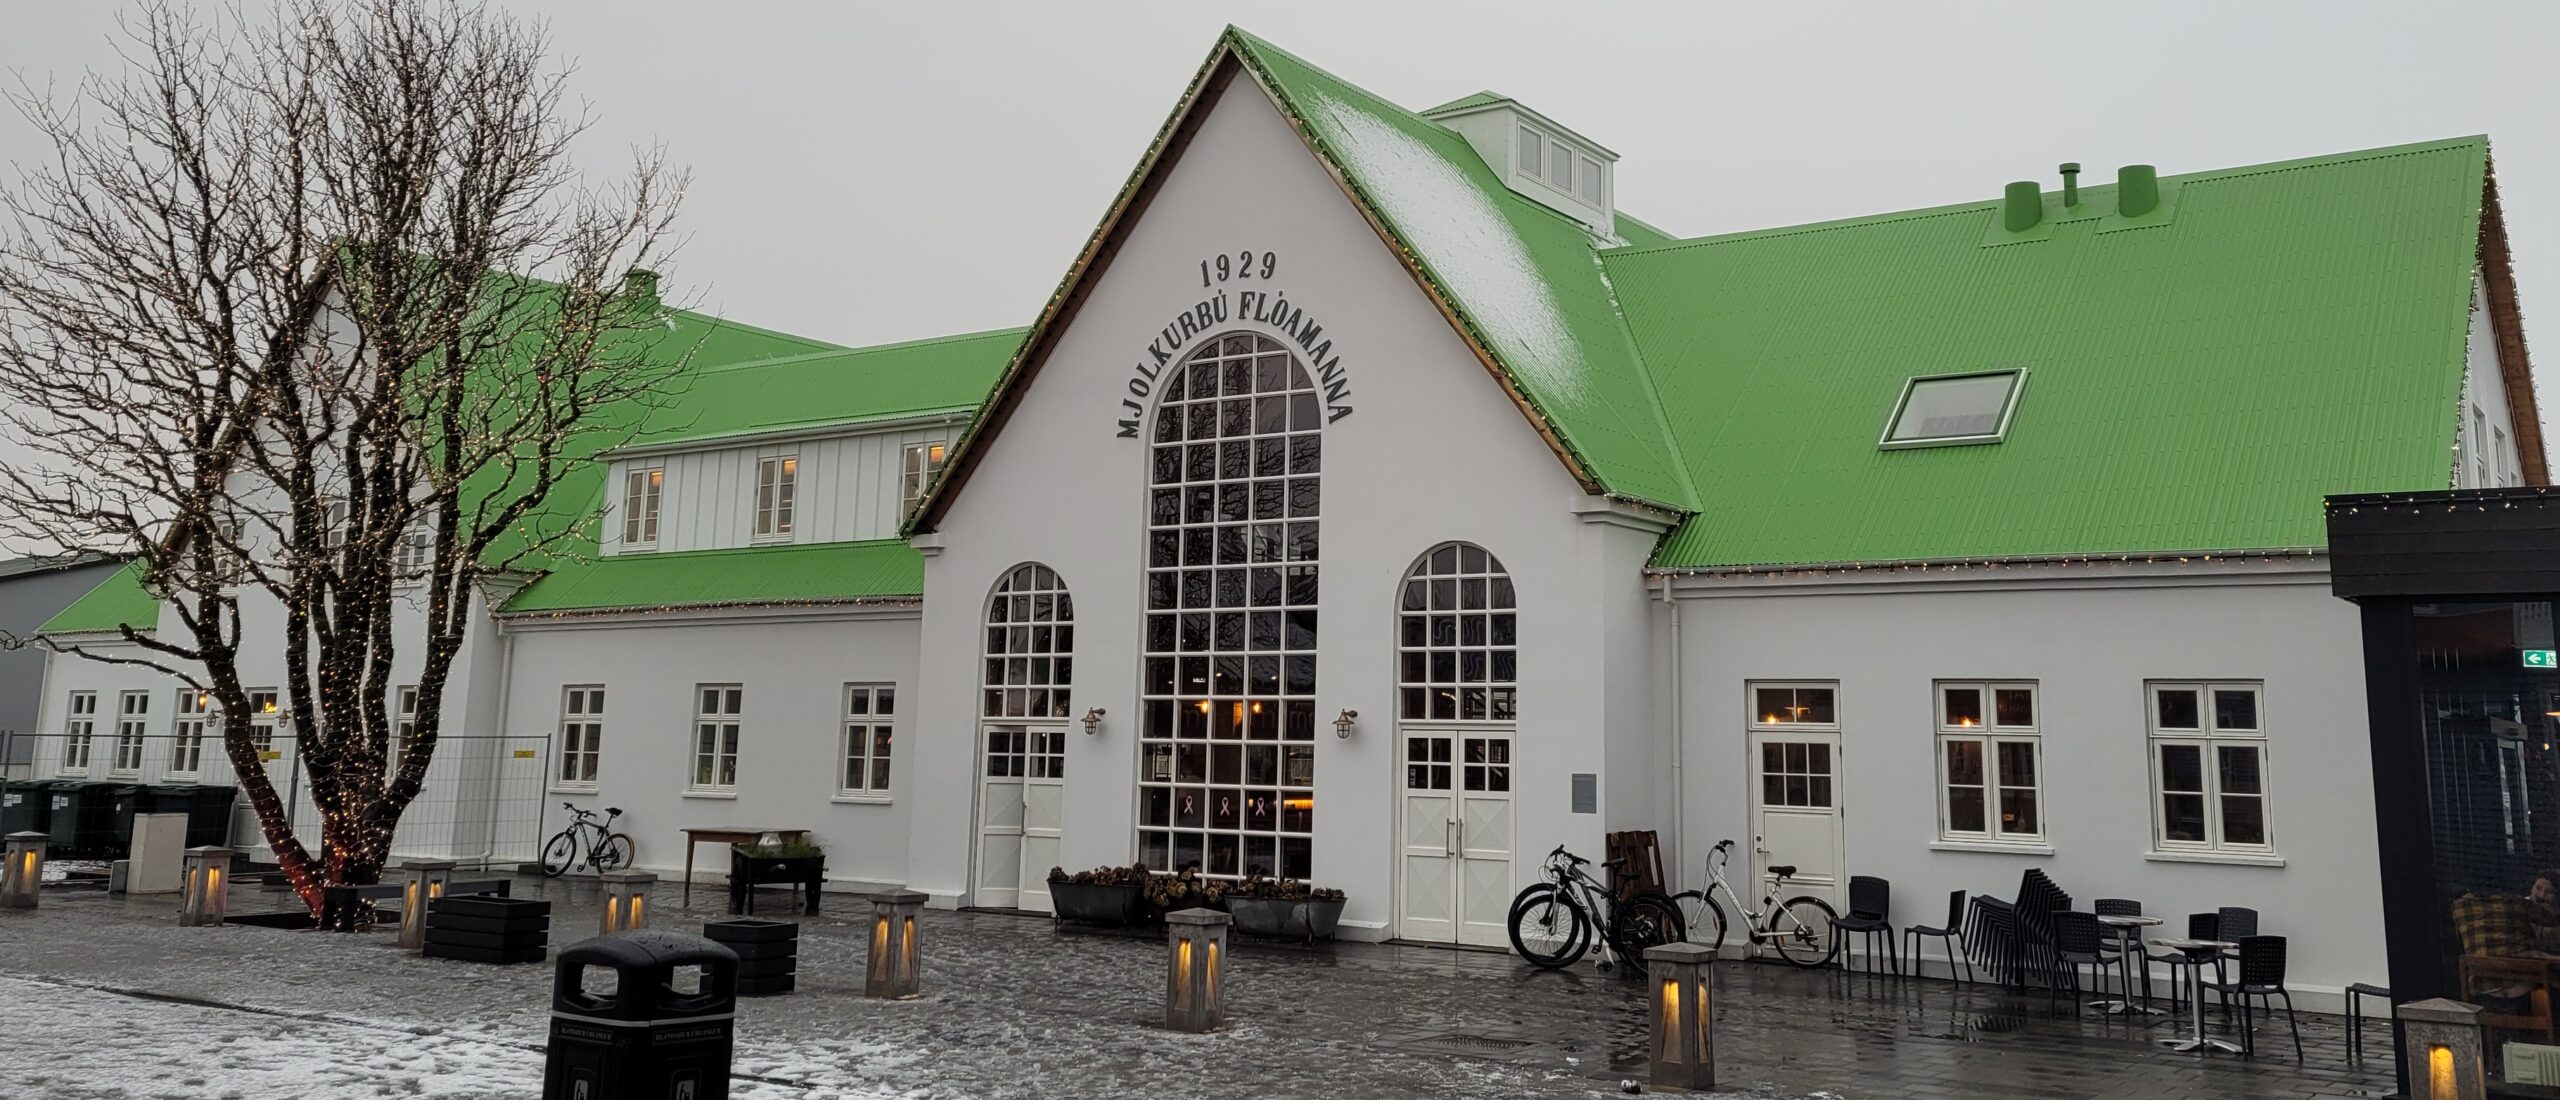 Mjólkurbú Flóamanna in Selfoss has won the MAMINNA-prize for the most beautiful new Nordic building.